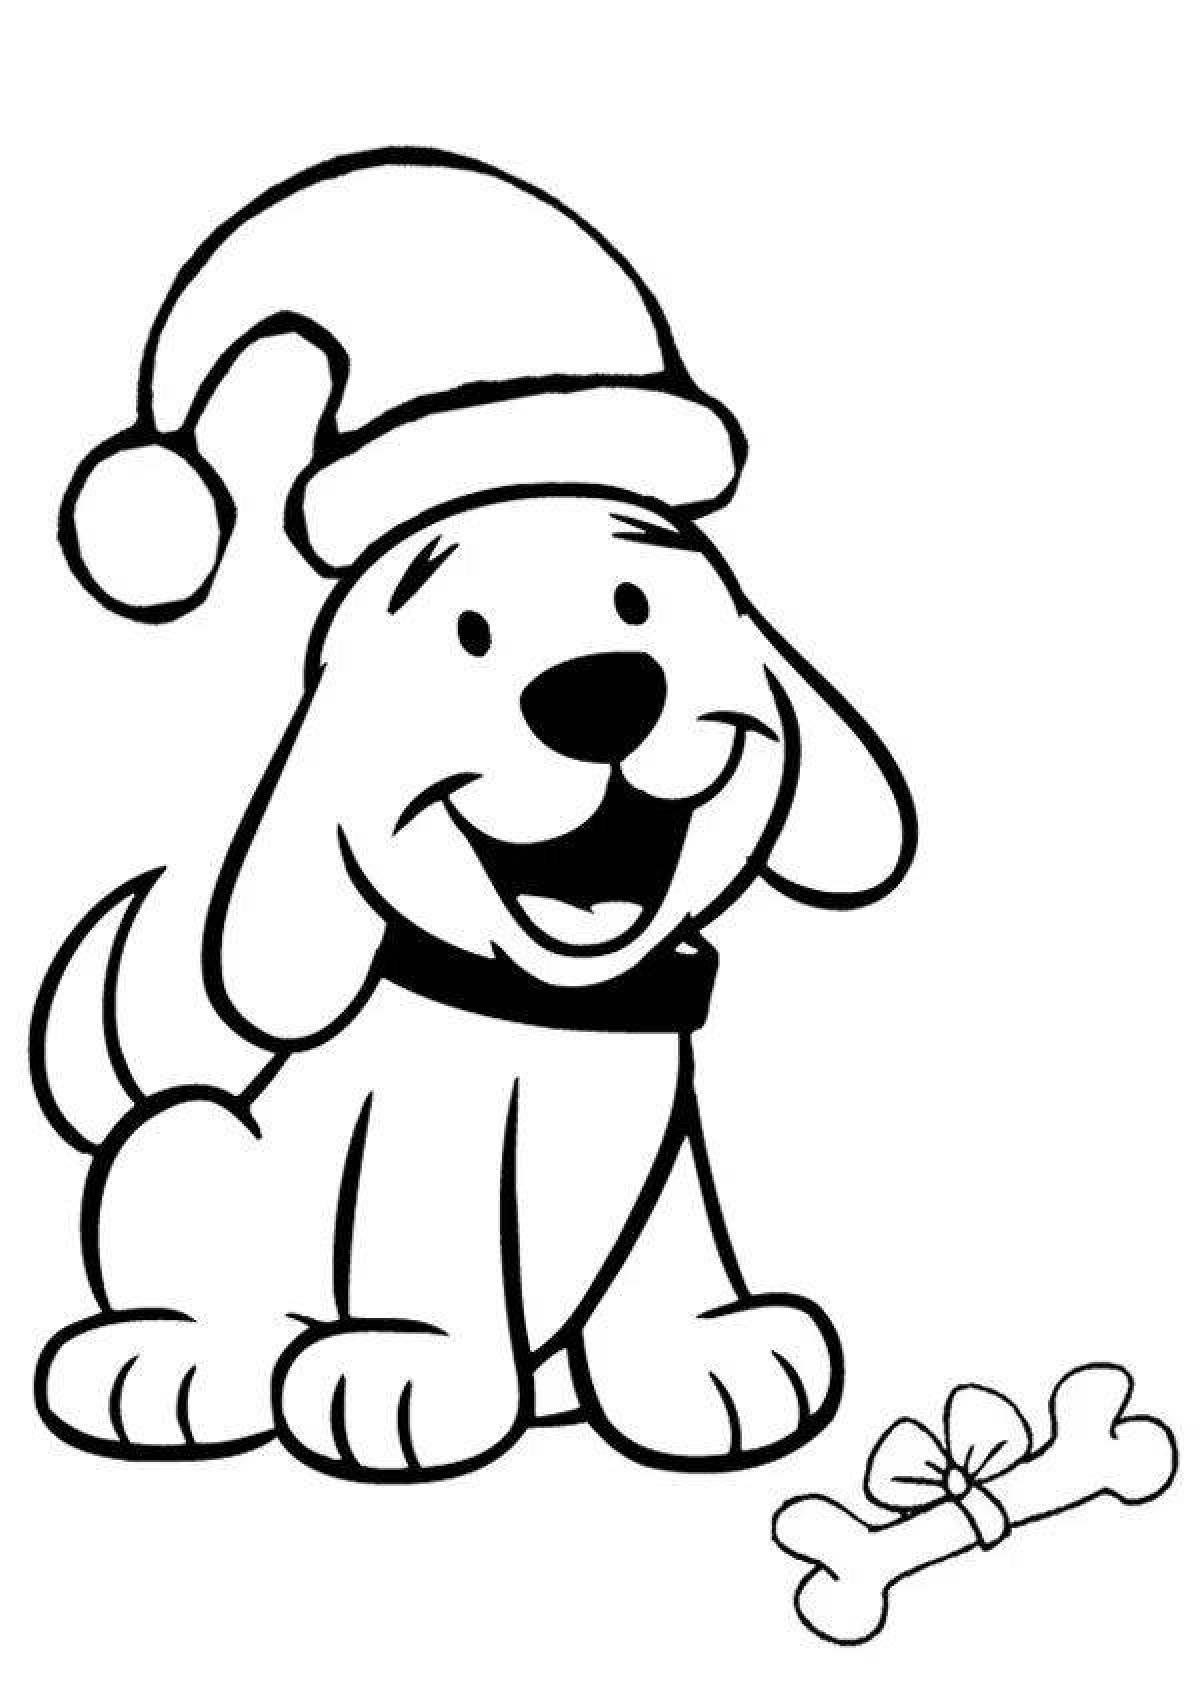 Rampant Christmas dog coloring book